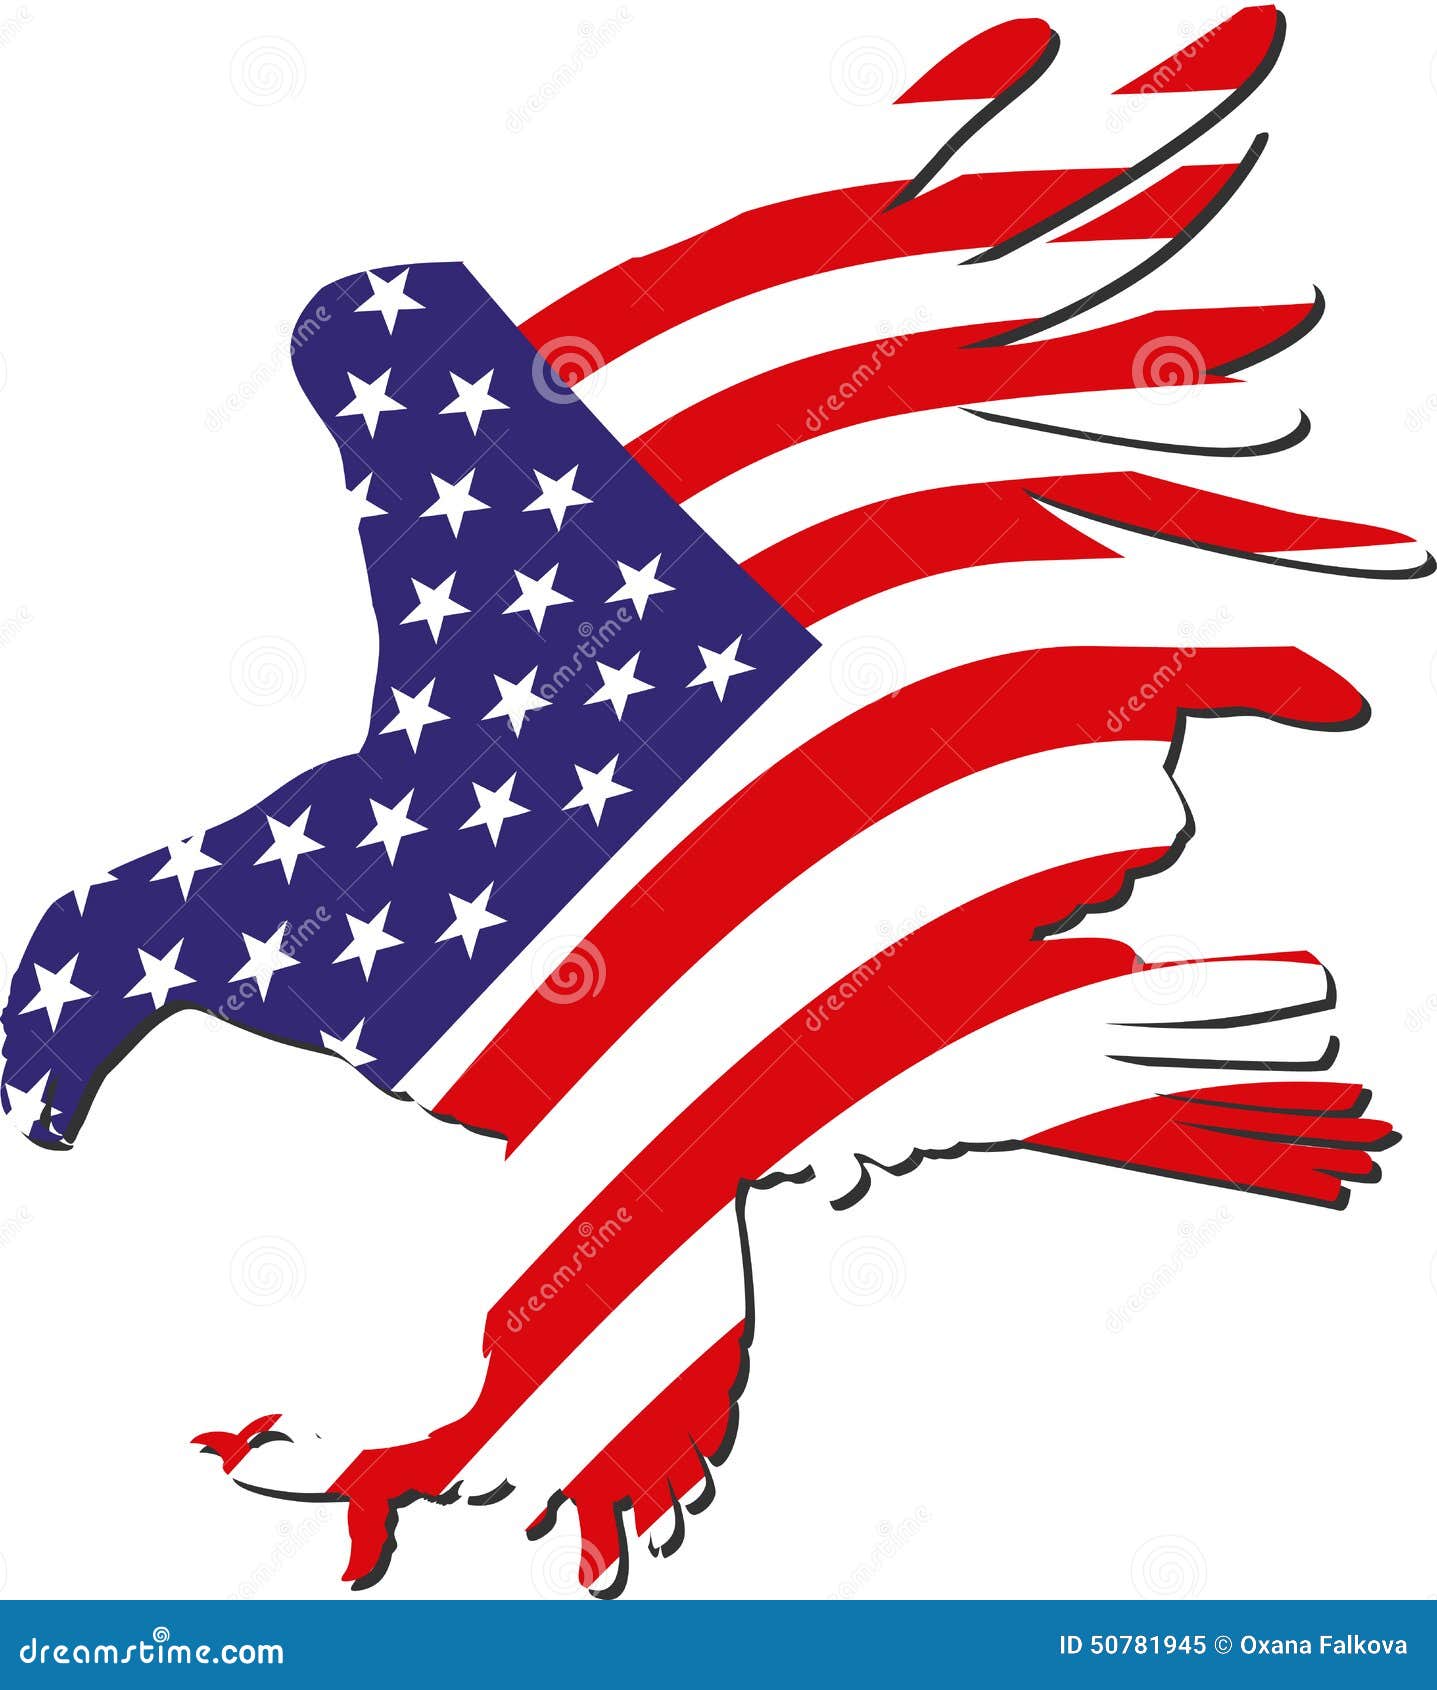 clipart american eagle symbol - photo #12